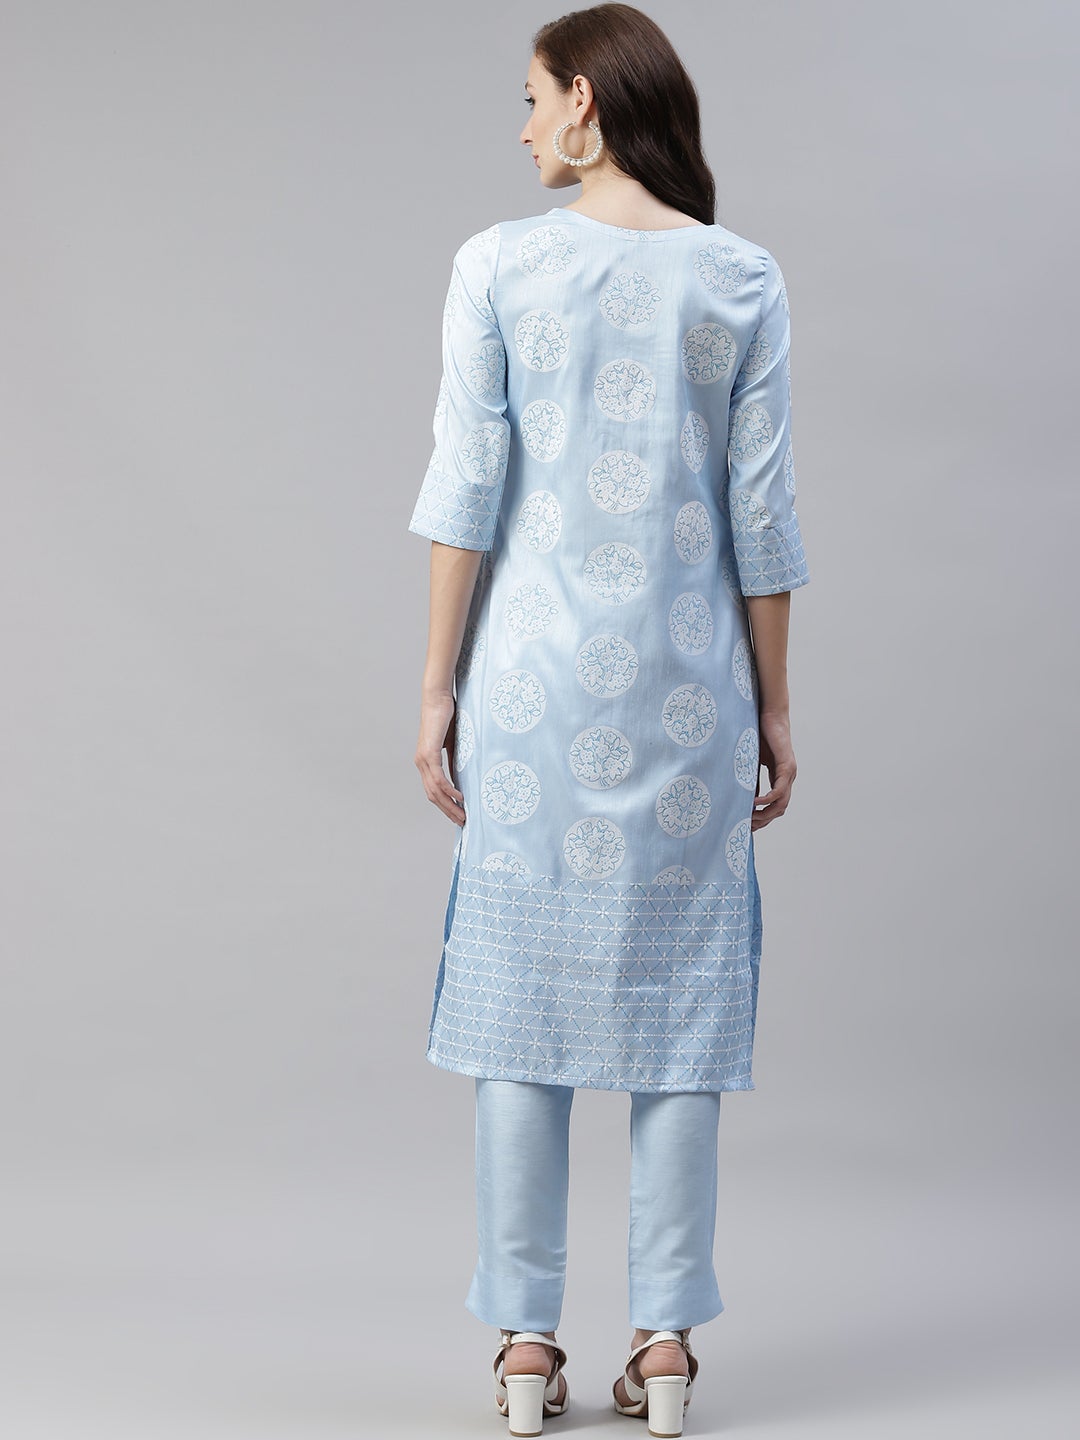 Mindhal Women's Sky Blue Color Khadi Printed Straight Kurta And Pant Set